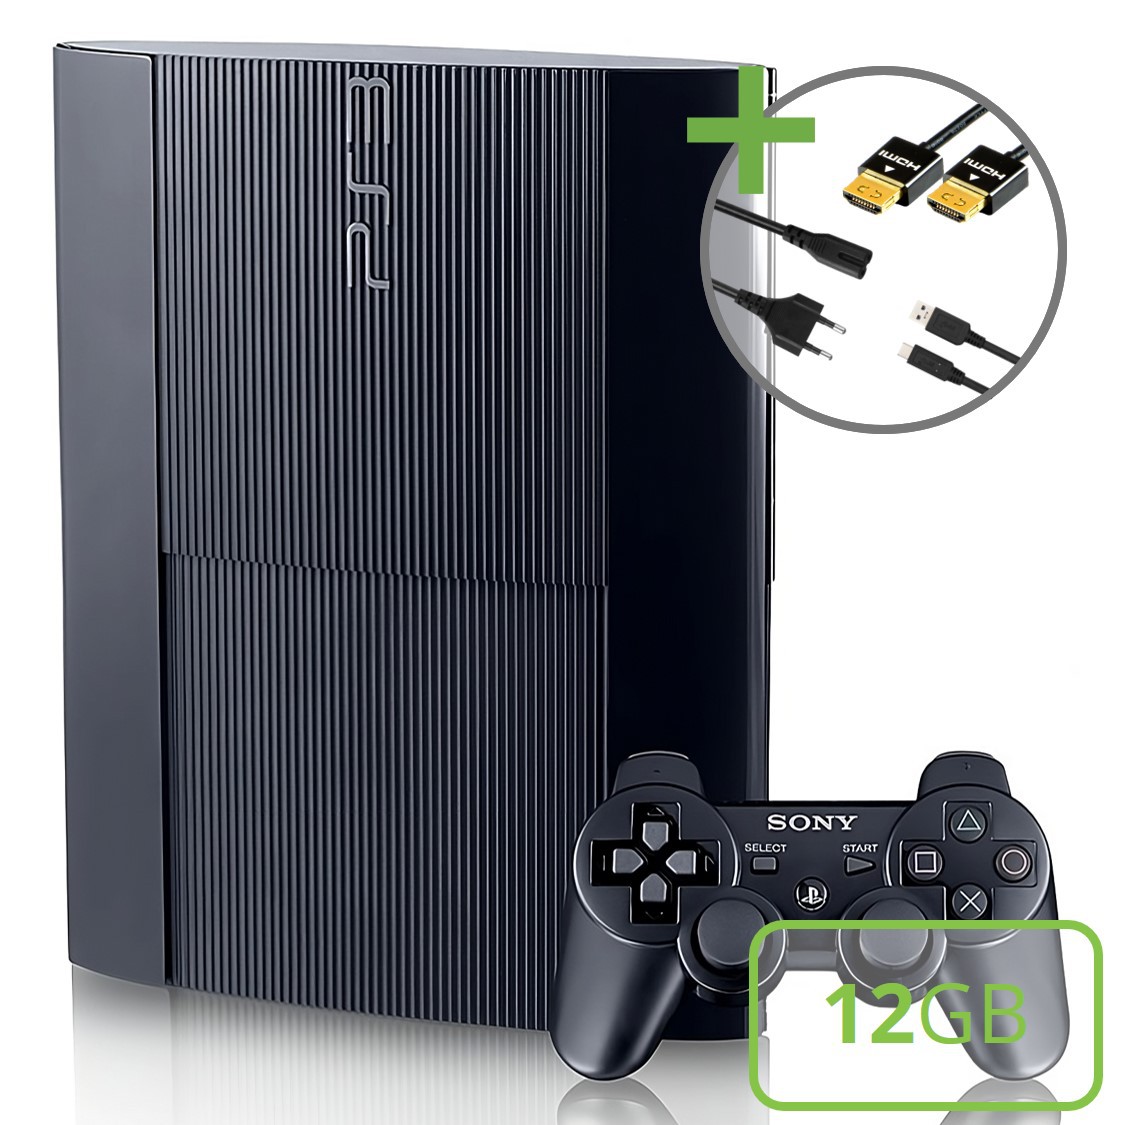 Sony PlayStation 3 Super Slim (12GB) Starter Pack - DualShock Edition - Playstation 3 Hardware - 2